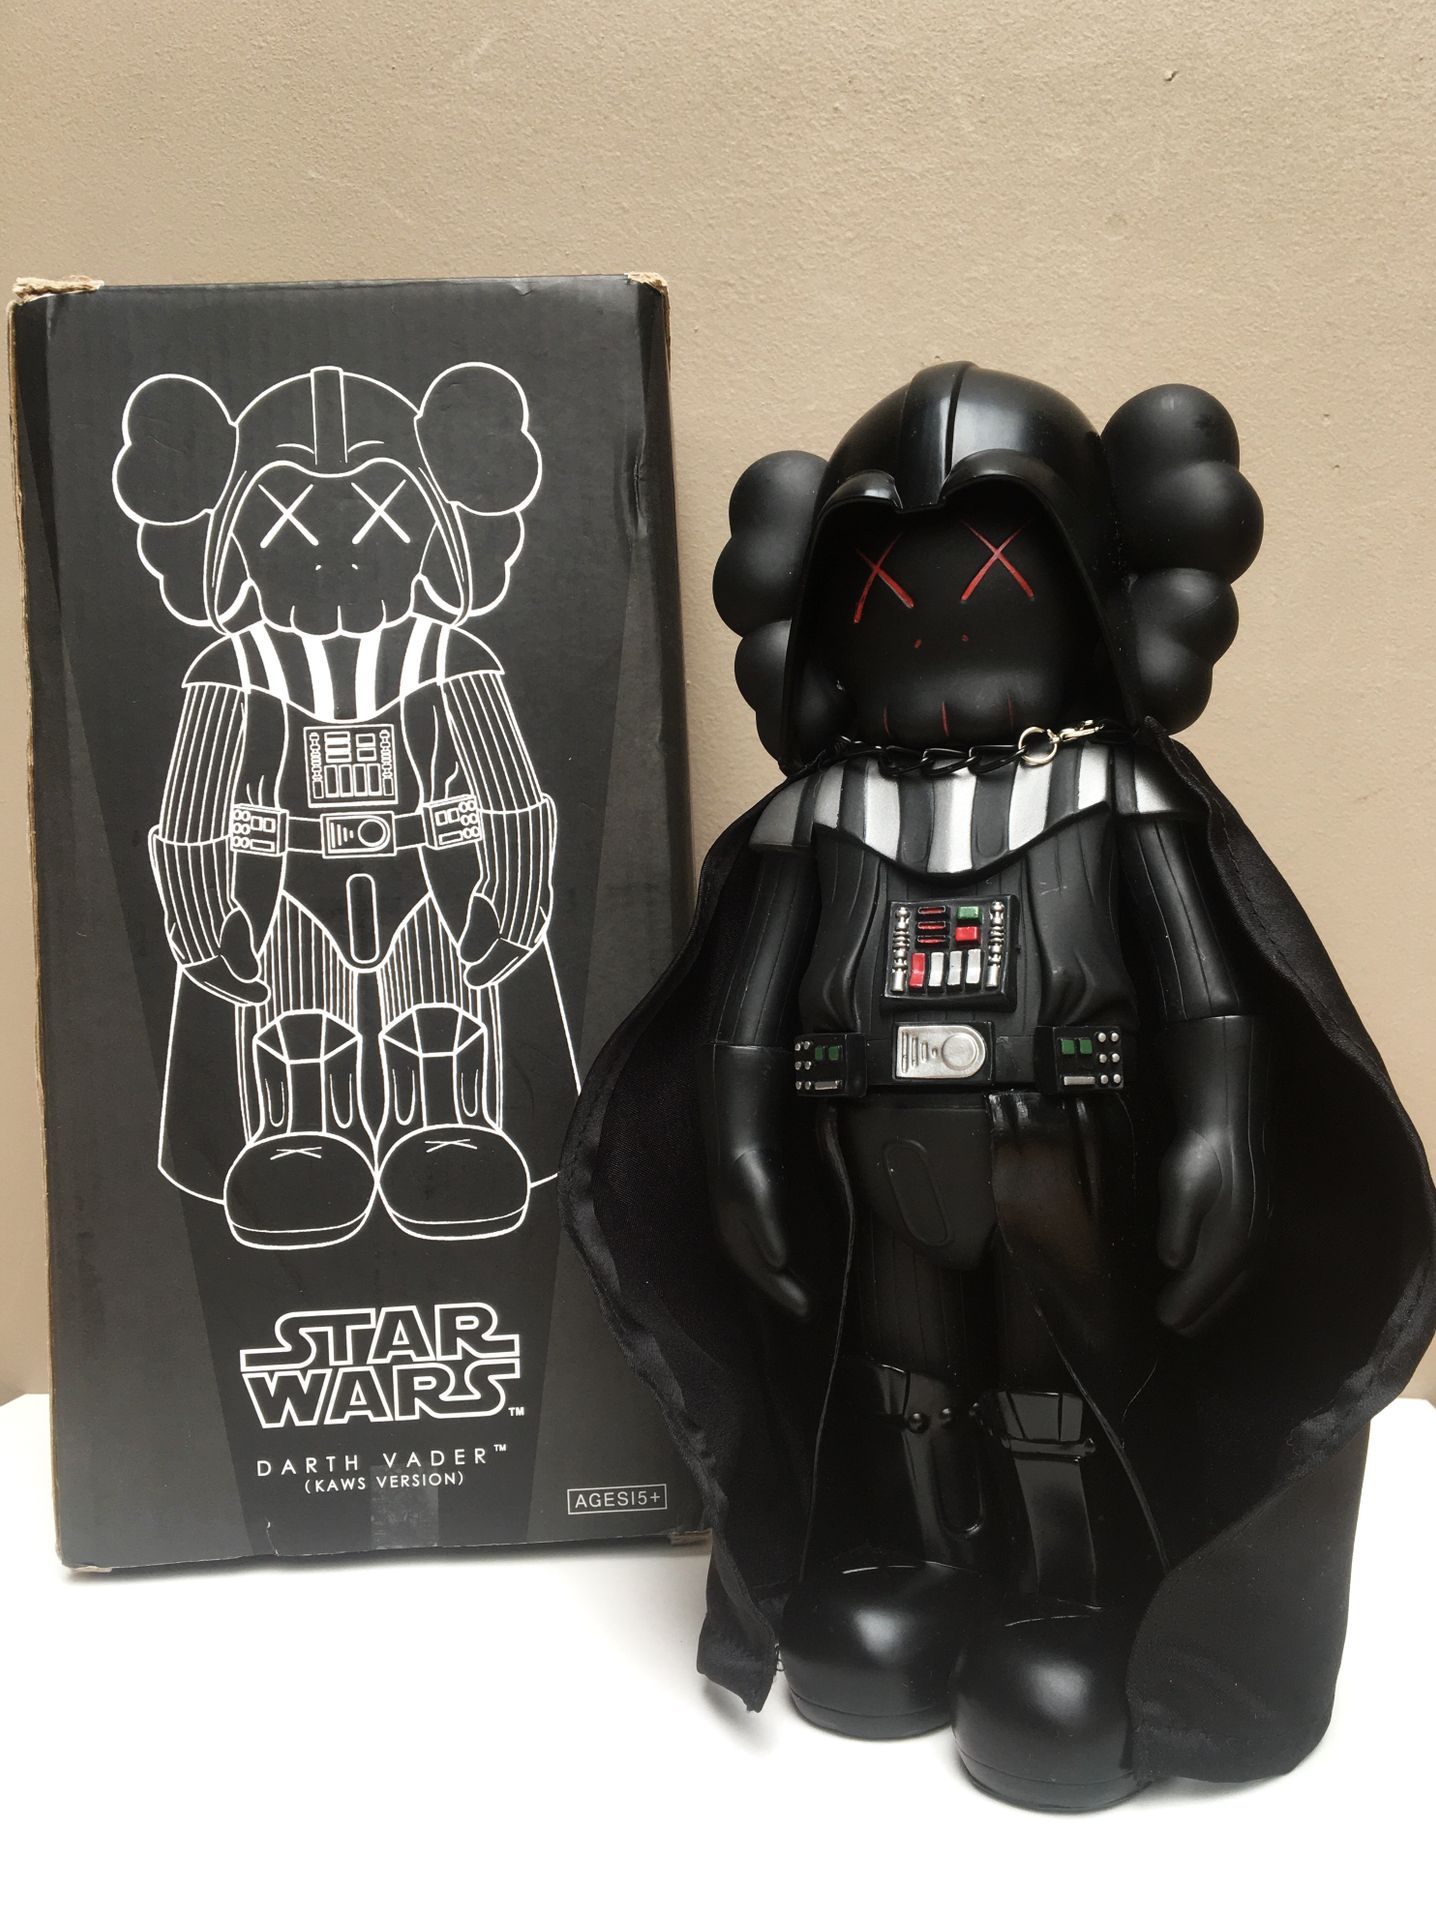 KAWS Star Wars - Darth Vader 2013. Size 11x26x6 cm. Designed by Kaws and Medicom&hellip;